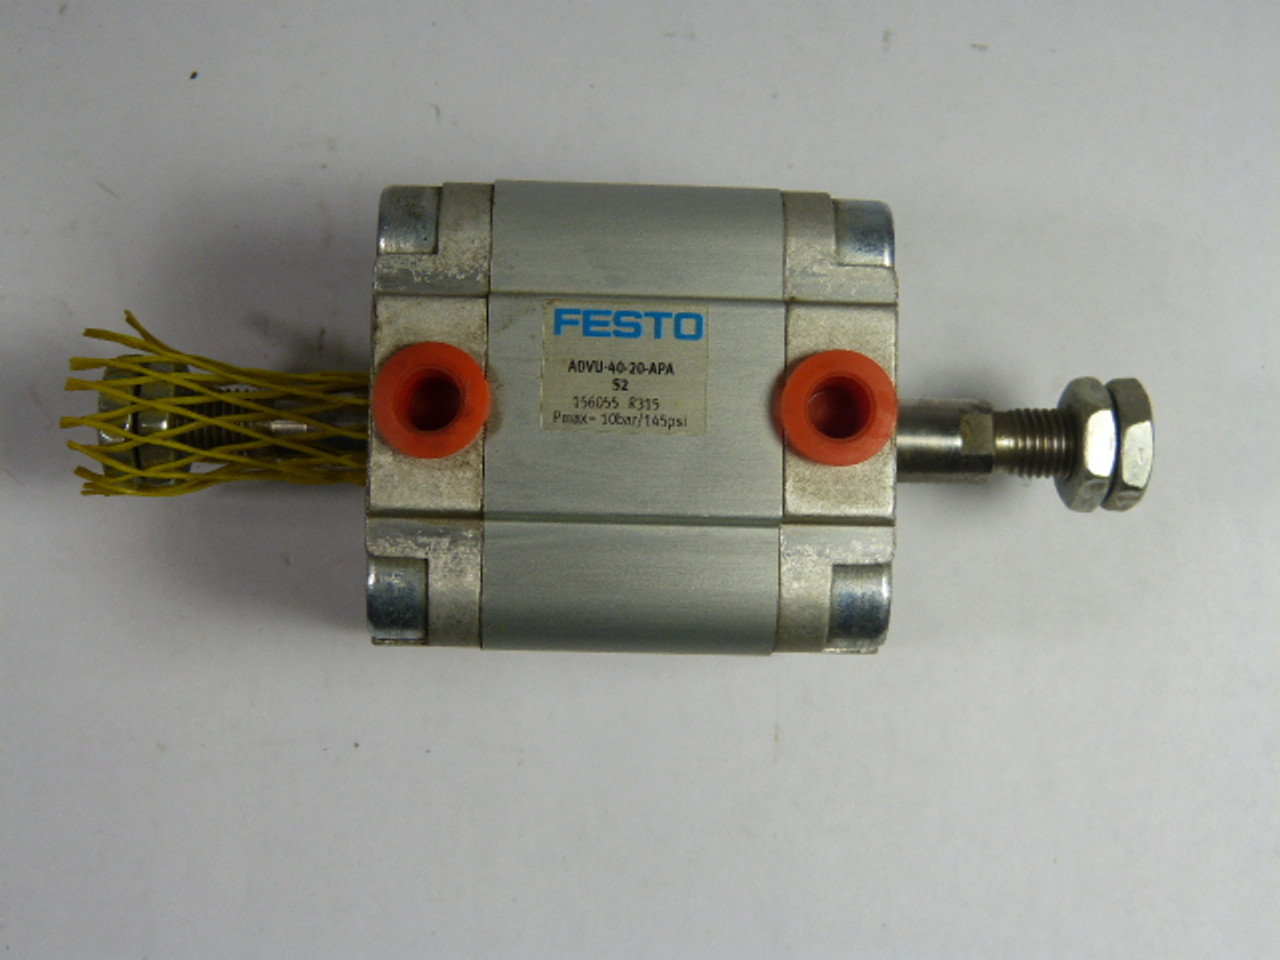 Festo ADVU-40-20-APA-S2 Pneumatic Cylinder 20mm Stroke 10Bar/145PSI USED